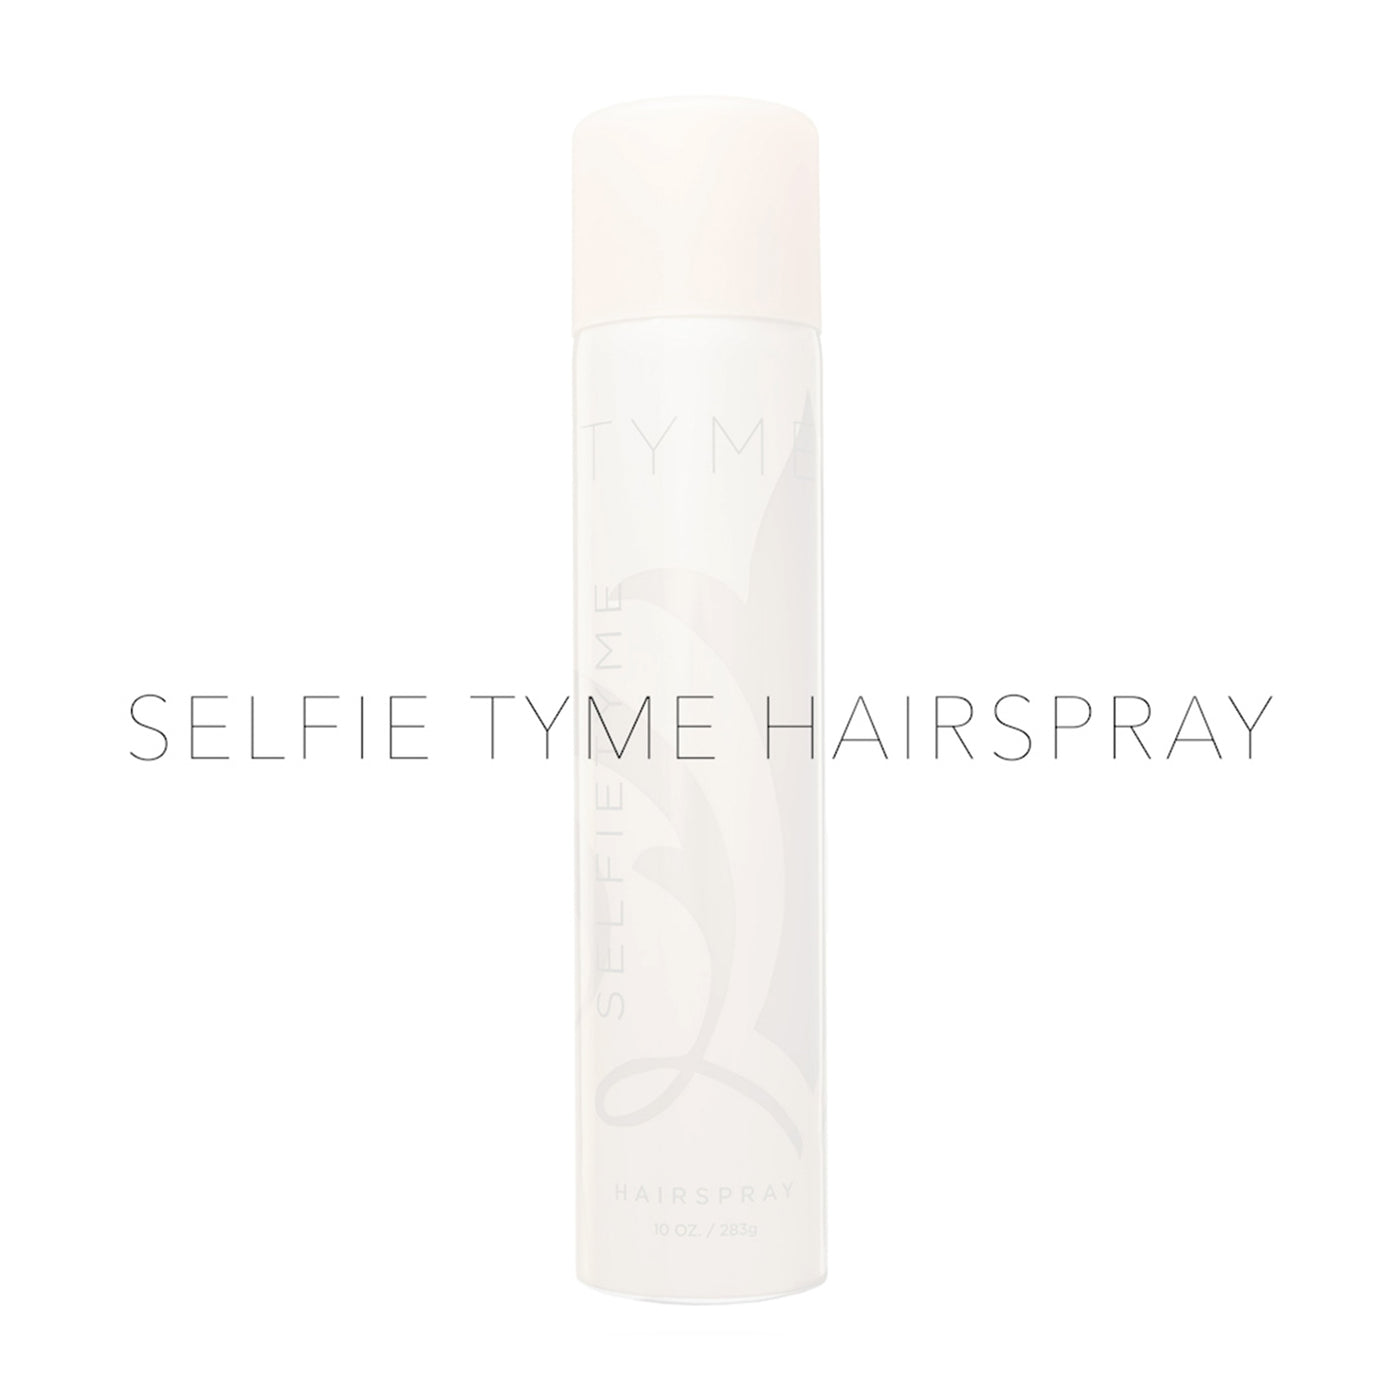 TYME Inventor and CEO, Jacynda Smith says SelfieTYME Hair Spray has a buildable strong hold formula.